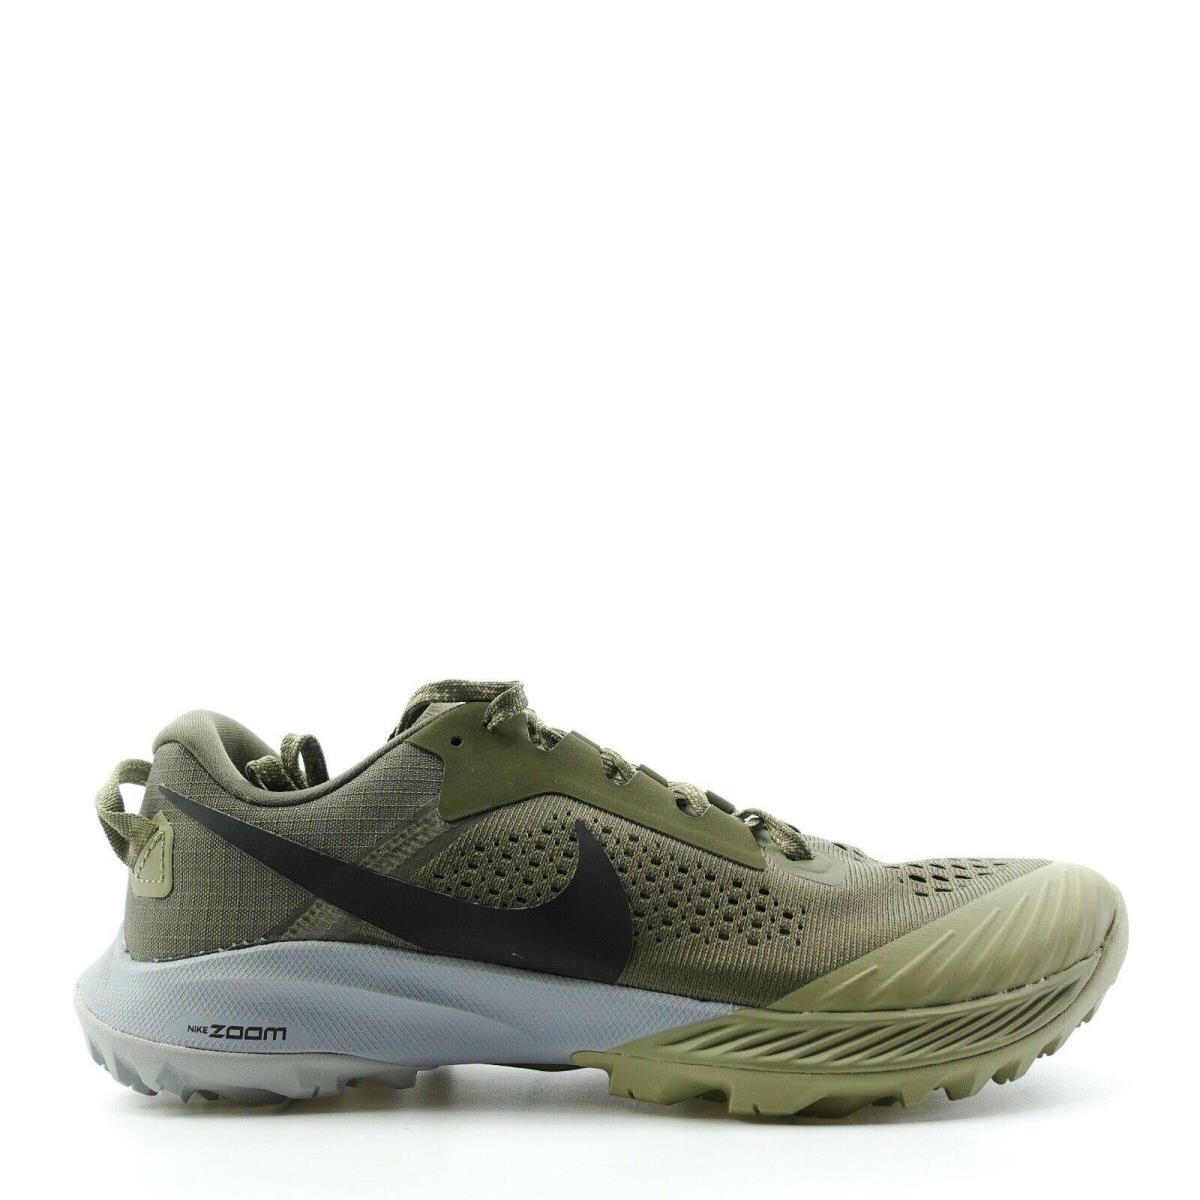 Nike Air Zoom Terra Kiger 6 Olive Green Trail Shoes CJ0219 201 Mens Size 7